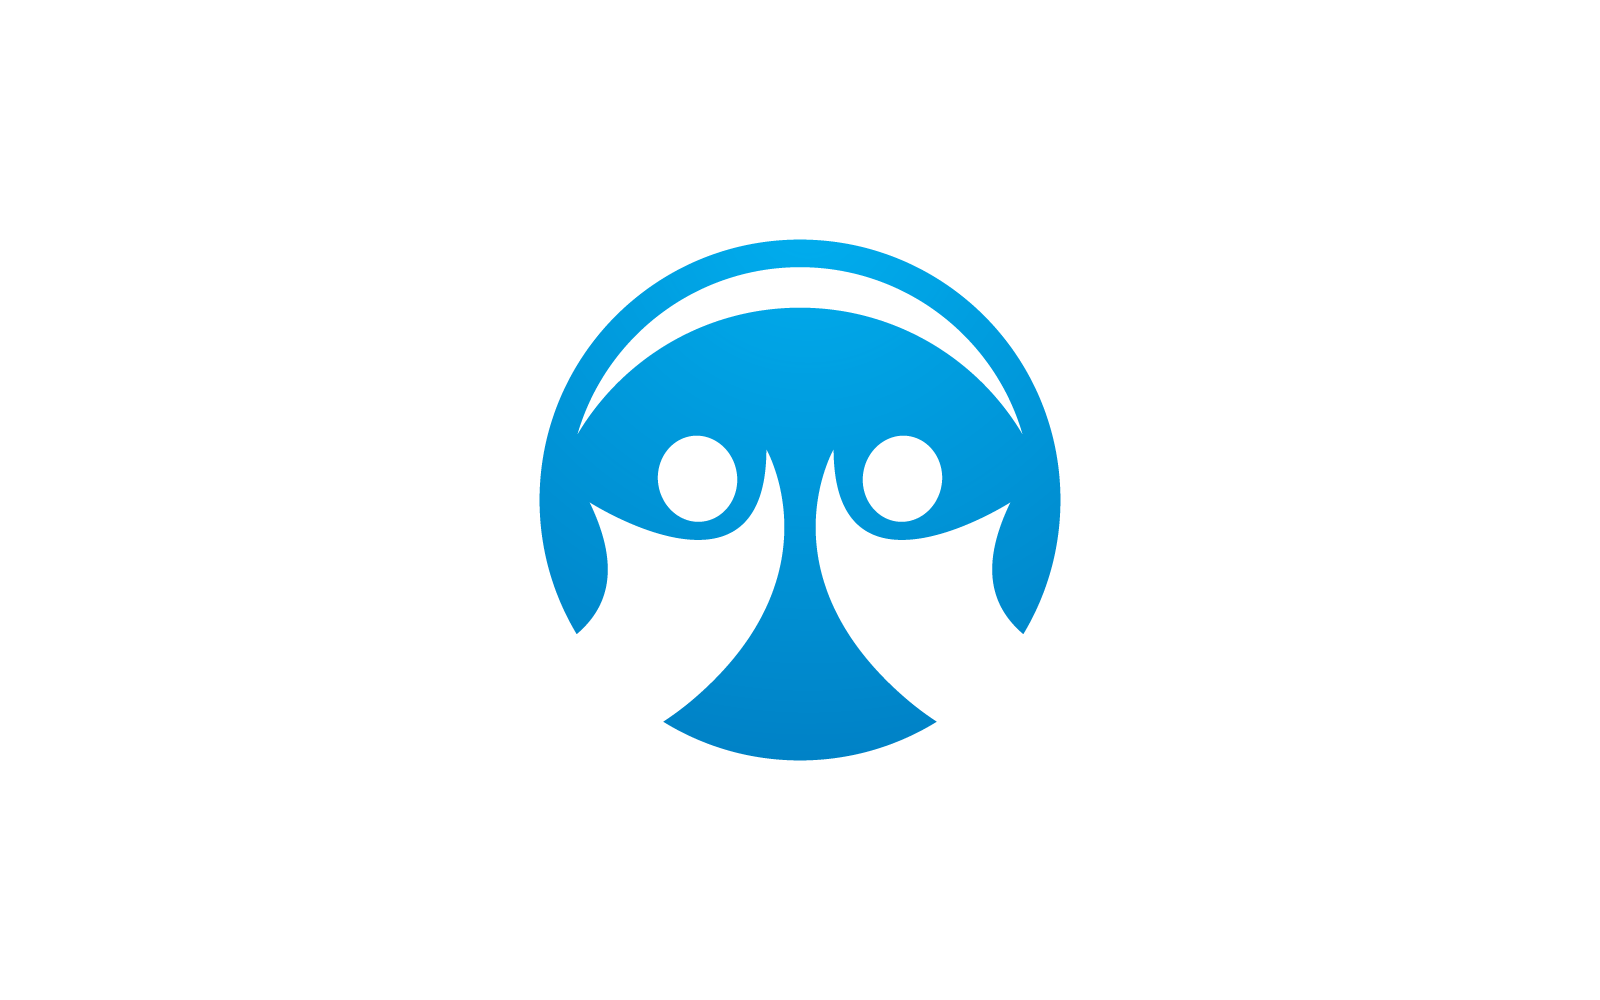 Design Community, network and social logo illustration Logo Template